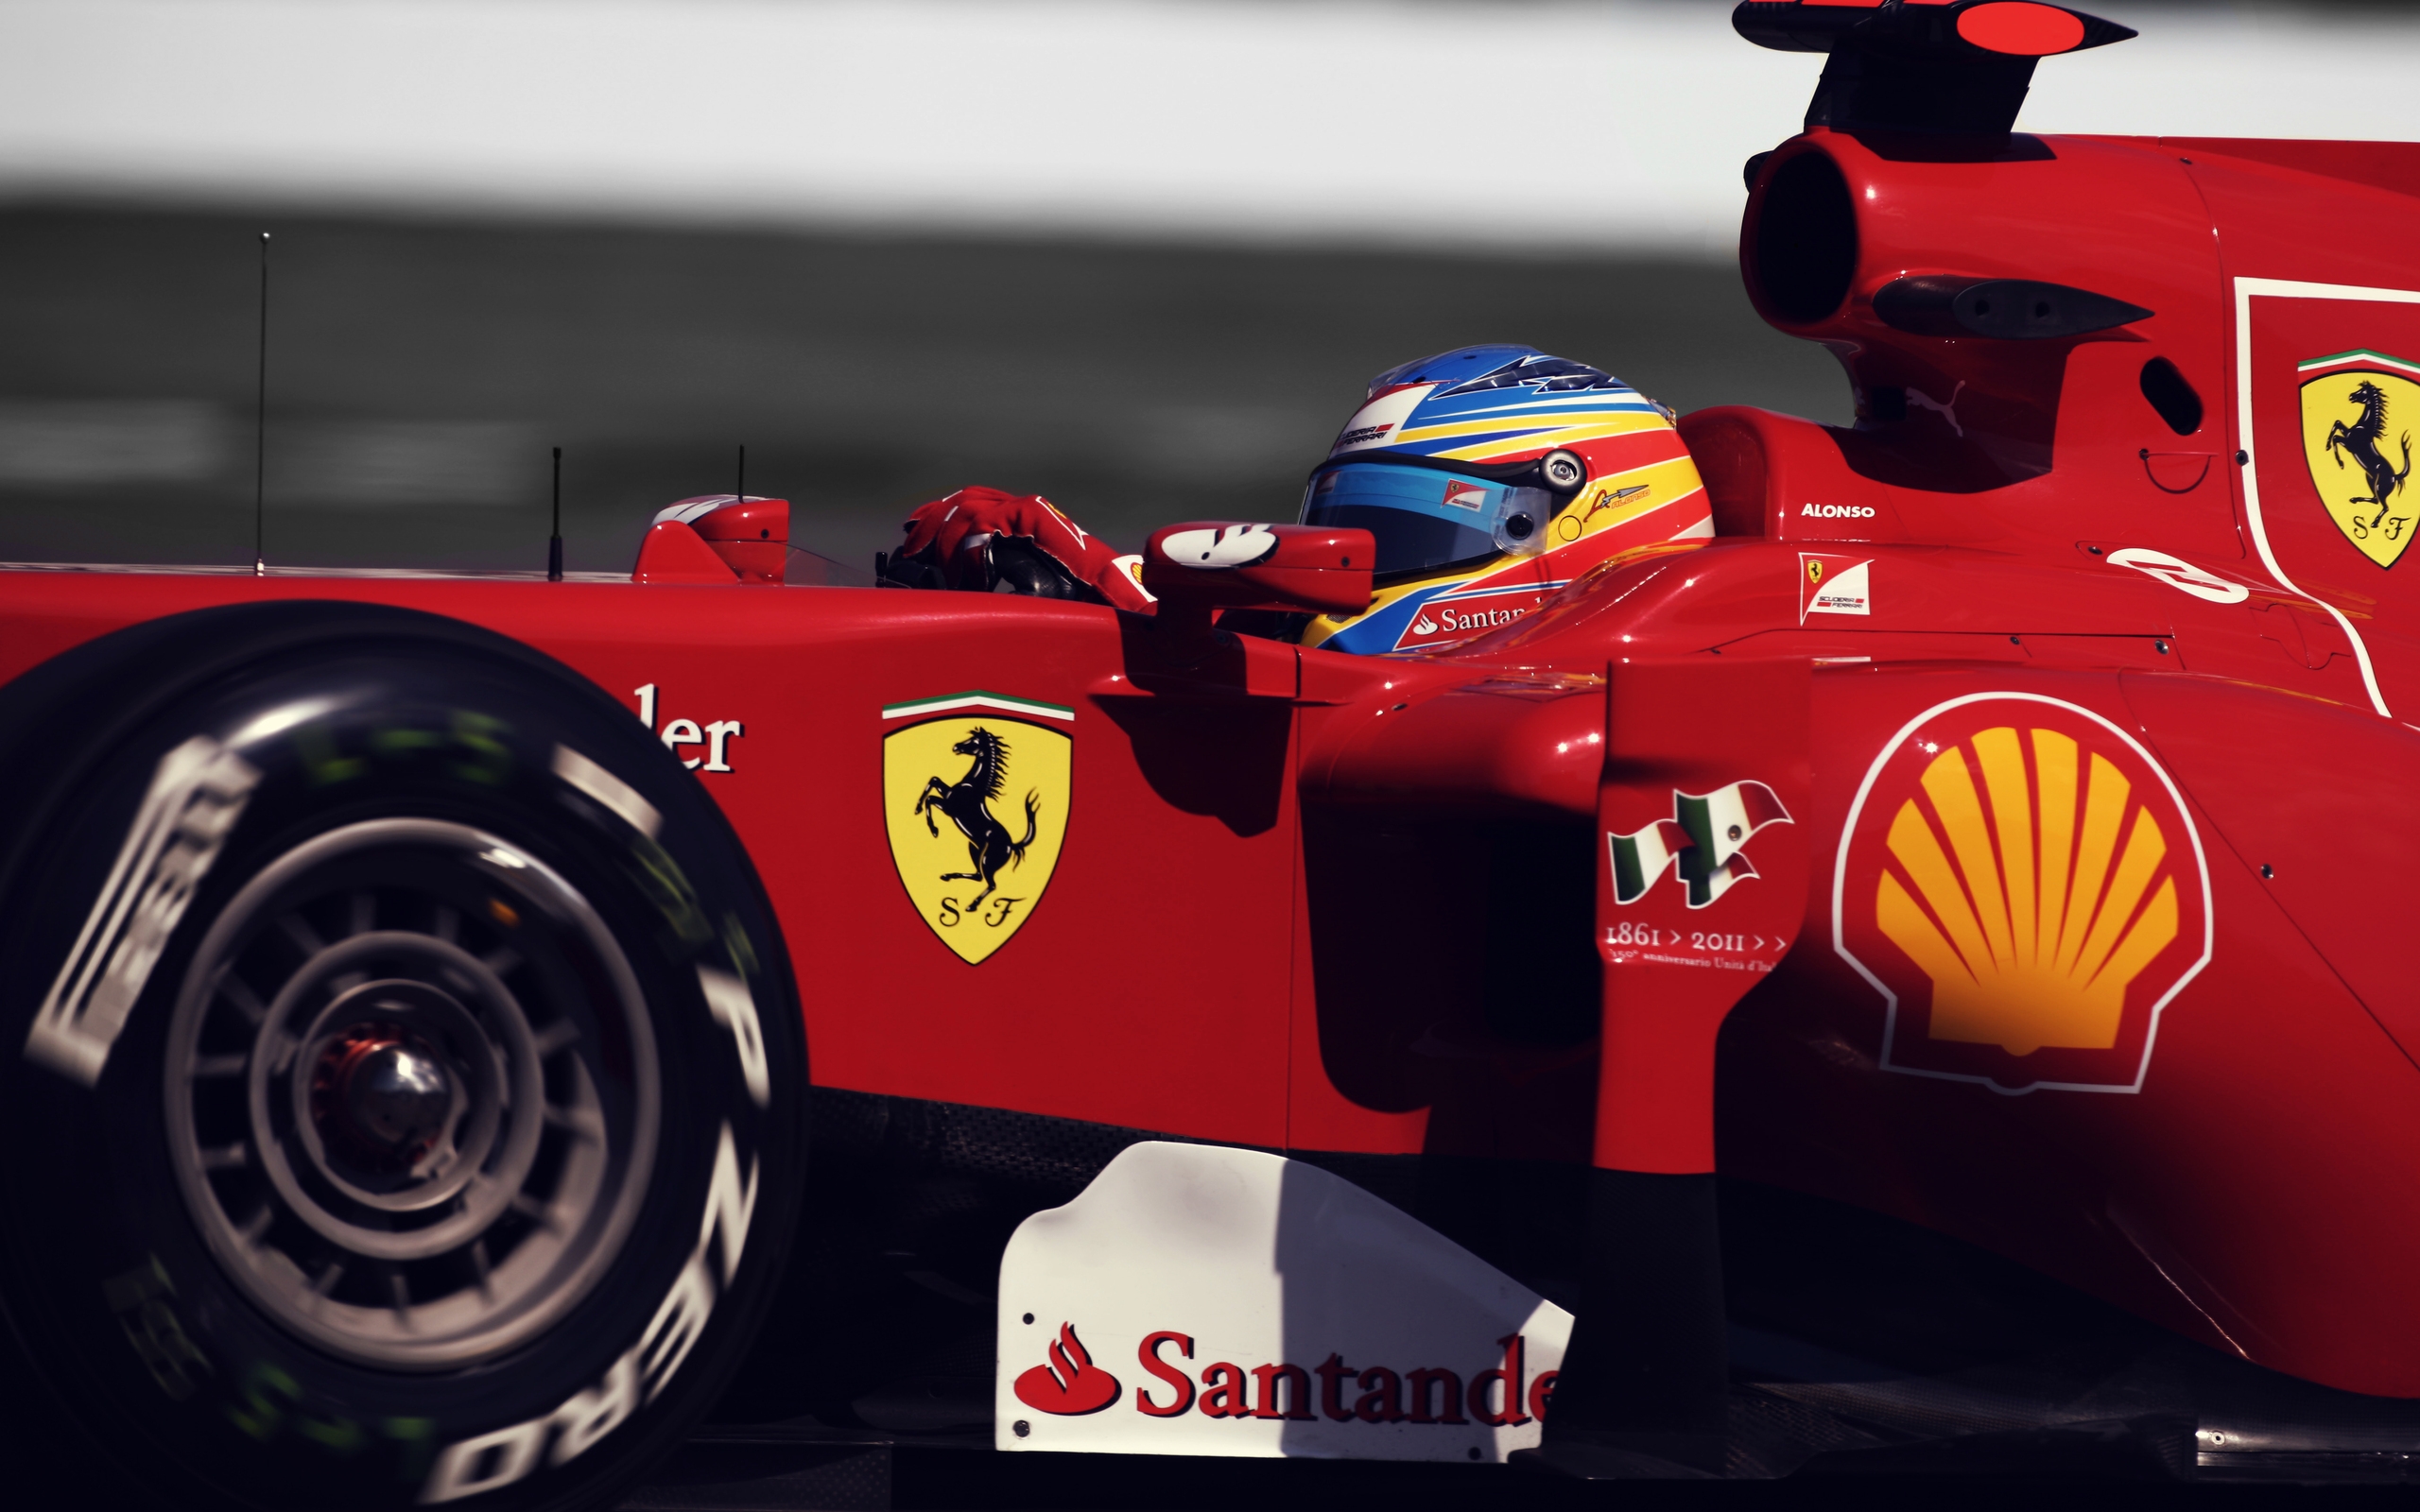 General 2560x1600 car Ferrari Formula 1 Fernando Alonso helmet race cars racing sport vehicle motorsport Racing driver